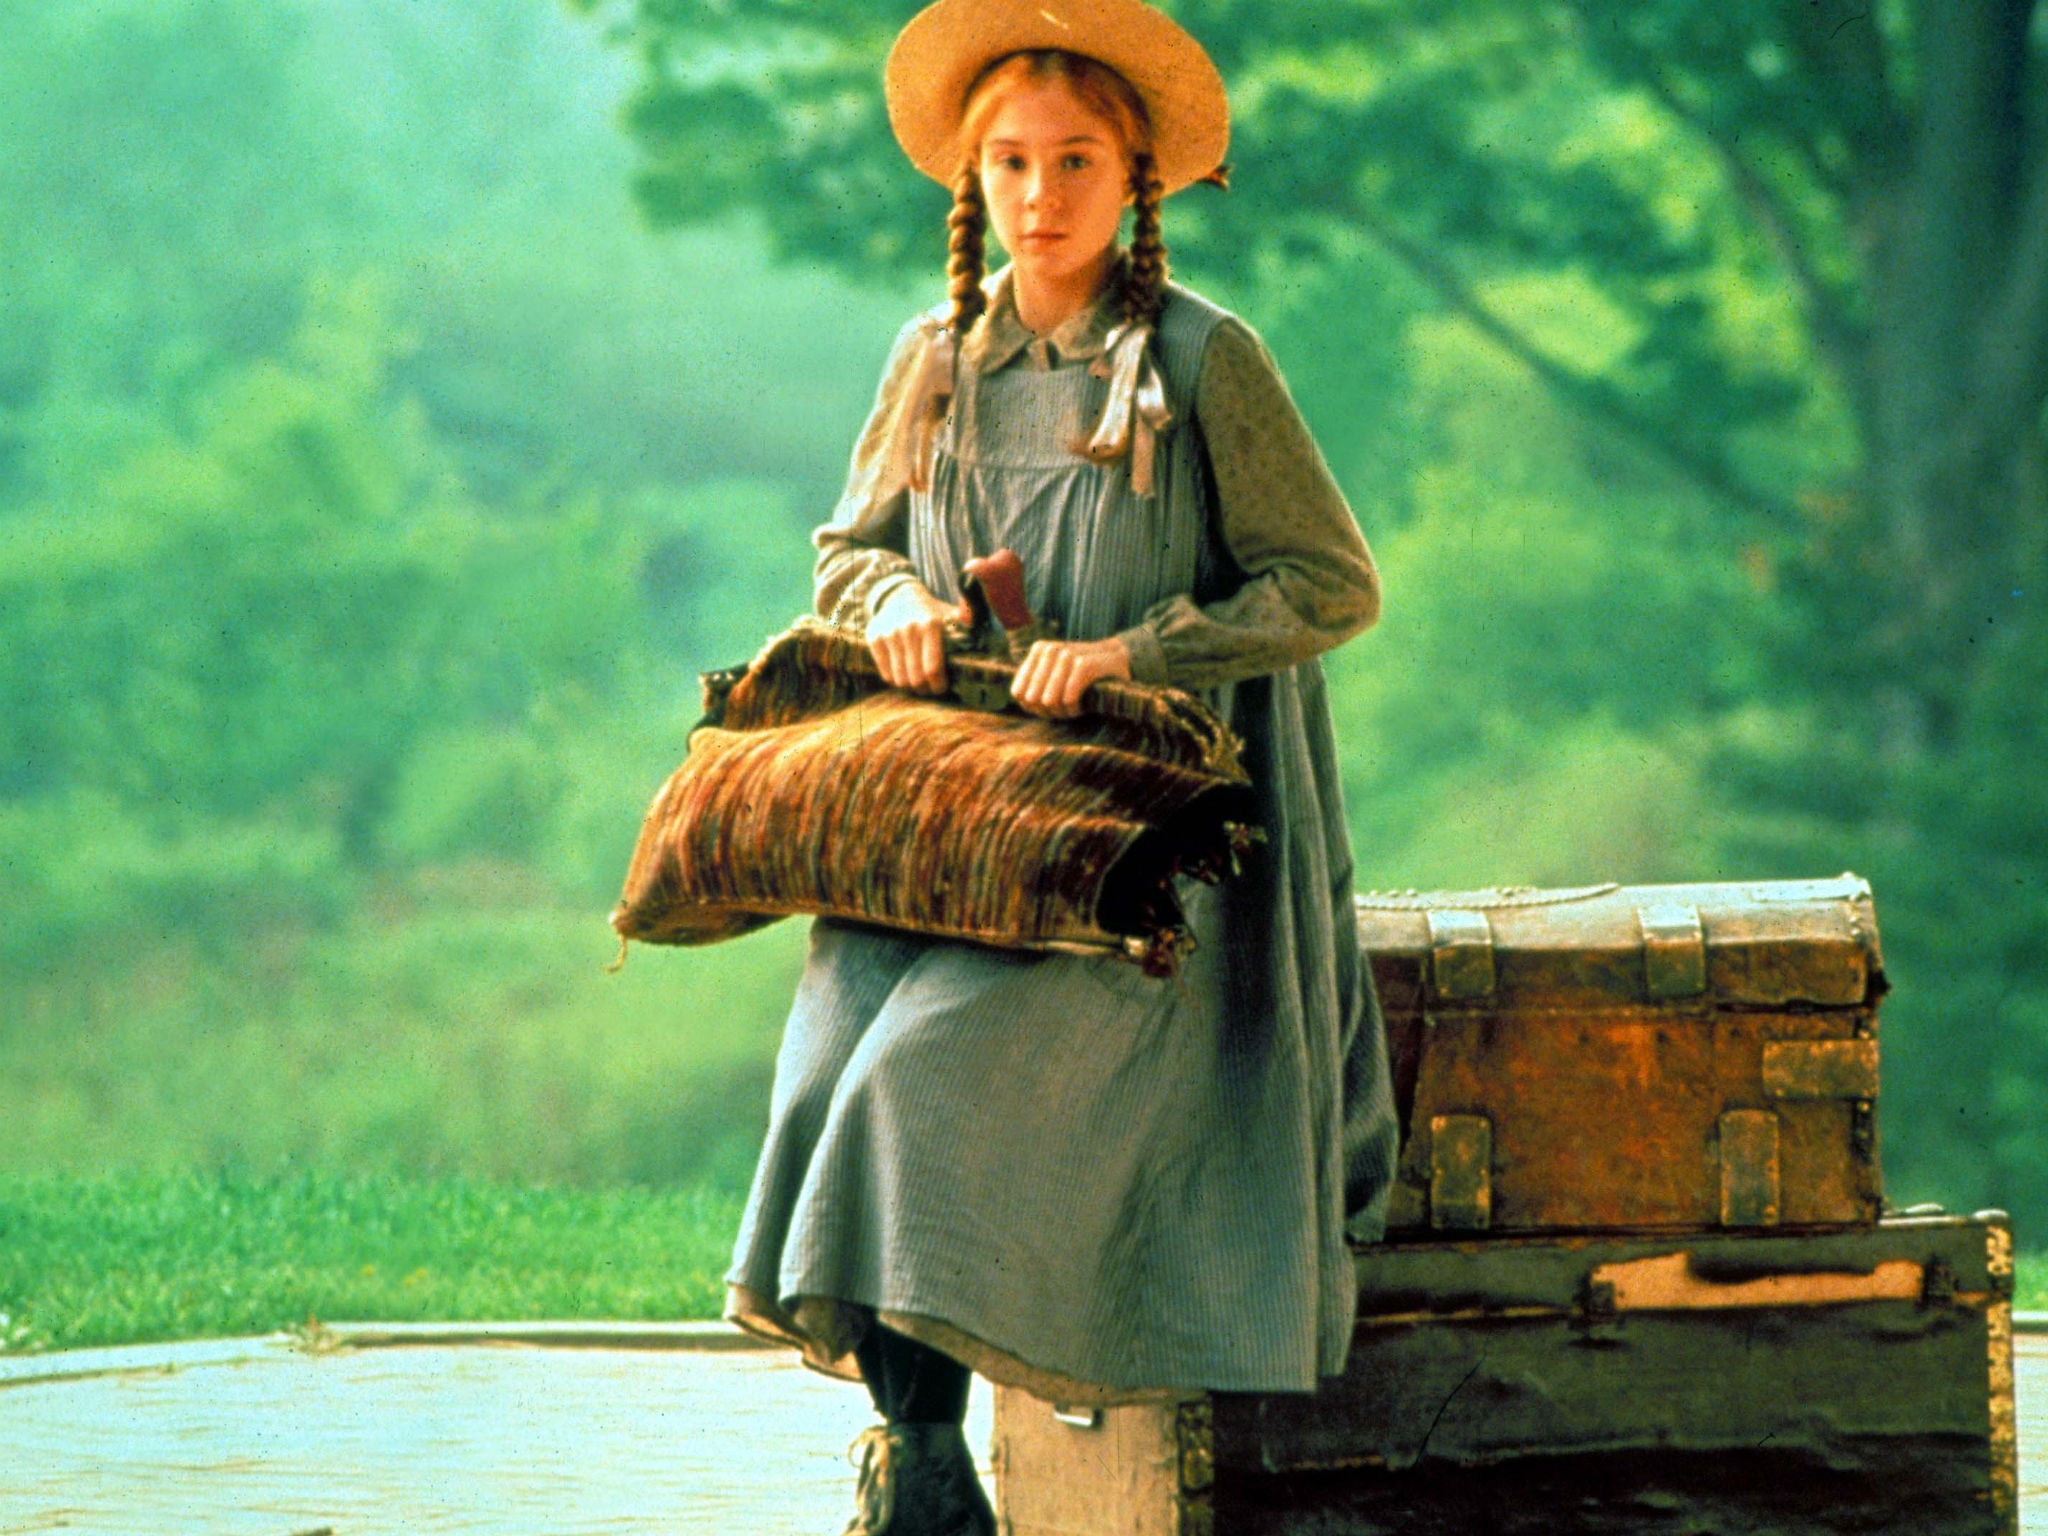 Megan Follows as Anne of Green Gables in the 1985 TV mini-series